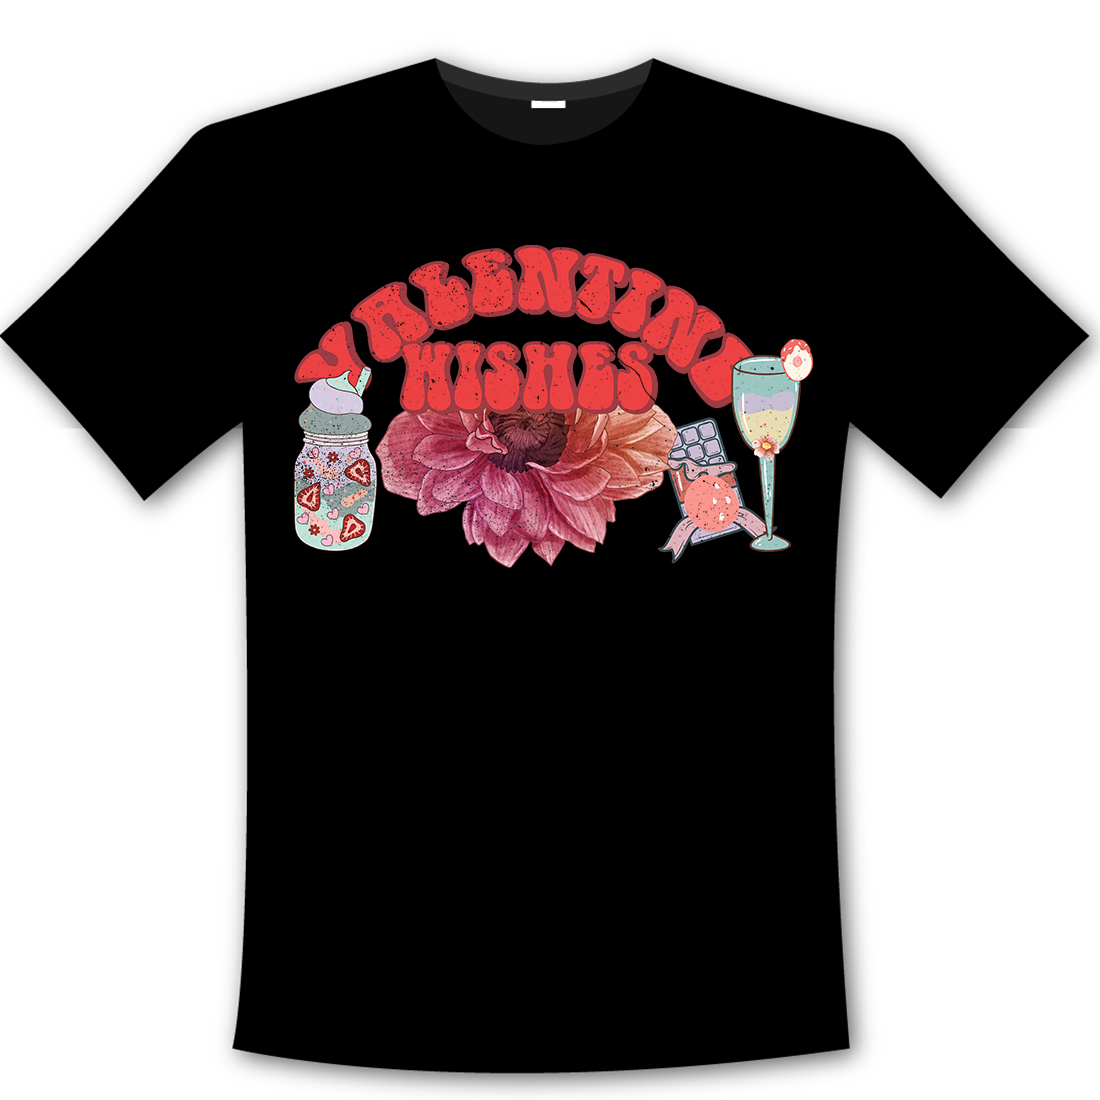 Retro Valentine’s Day T-Shirt Design cover image.